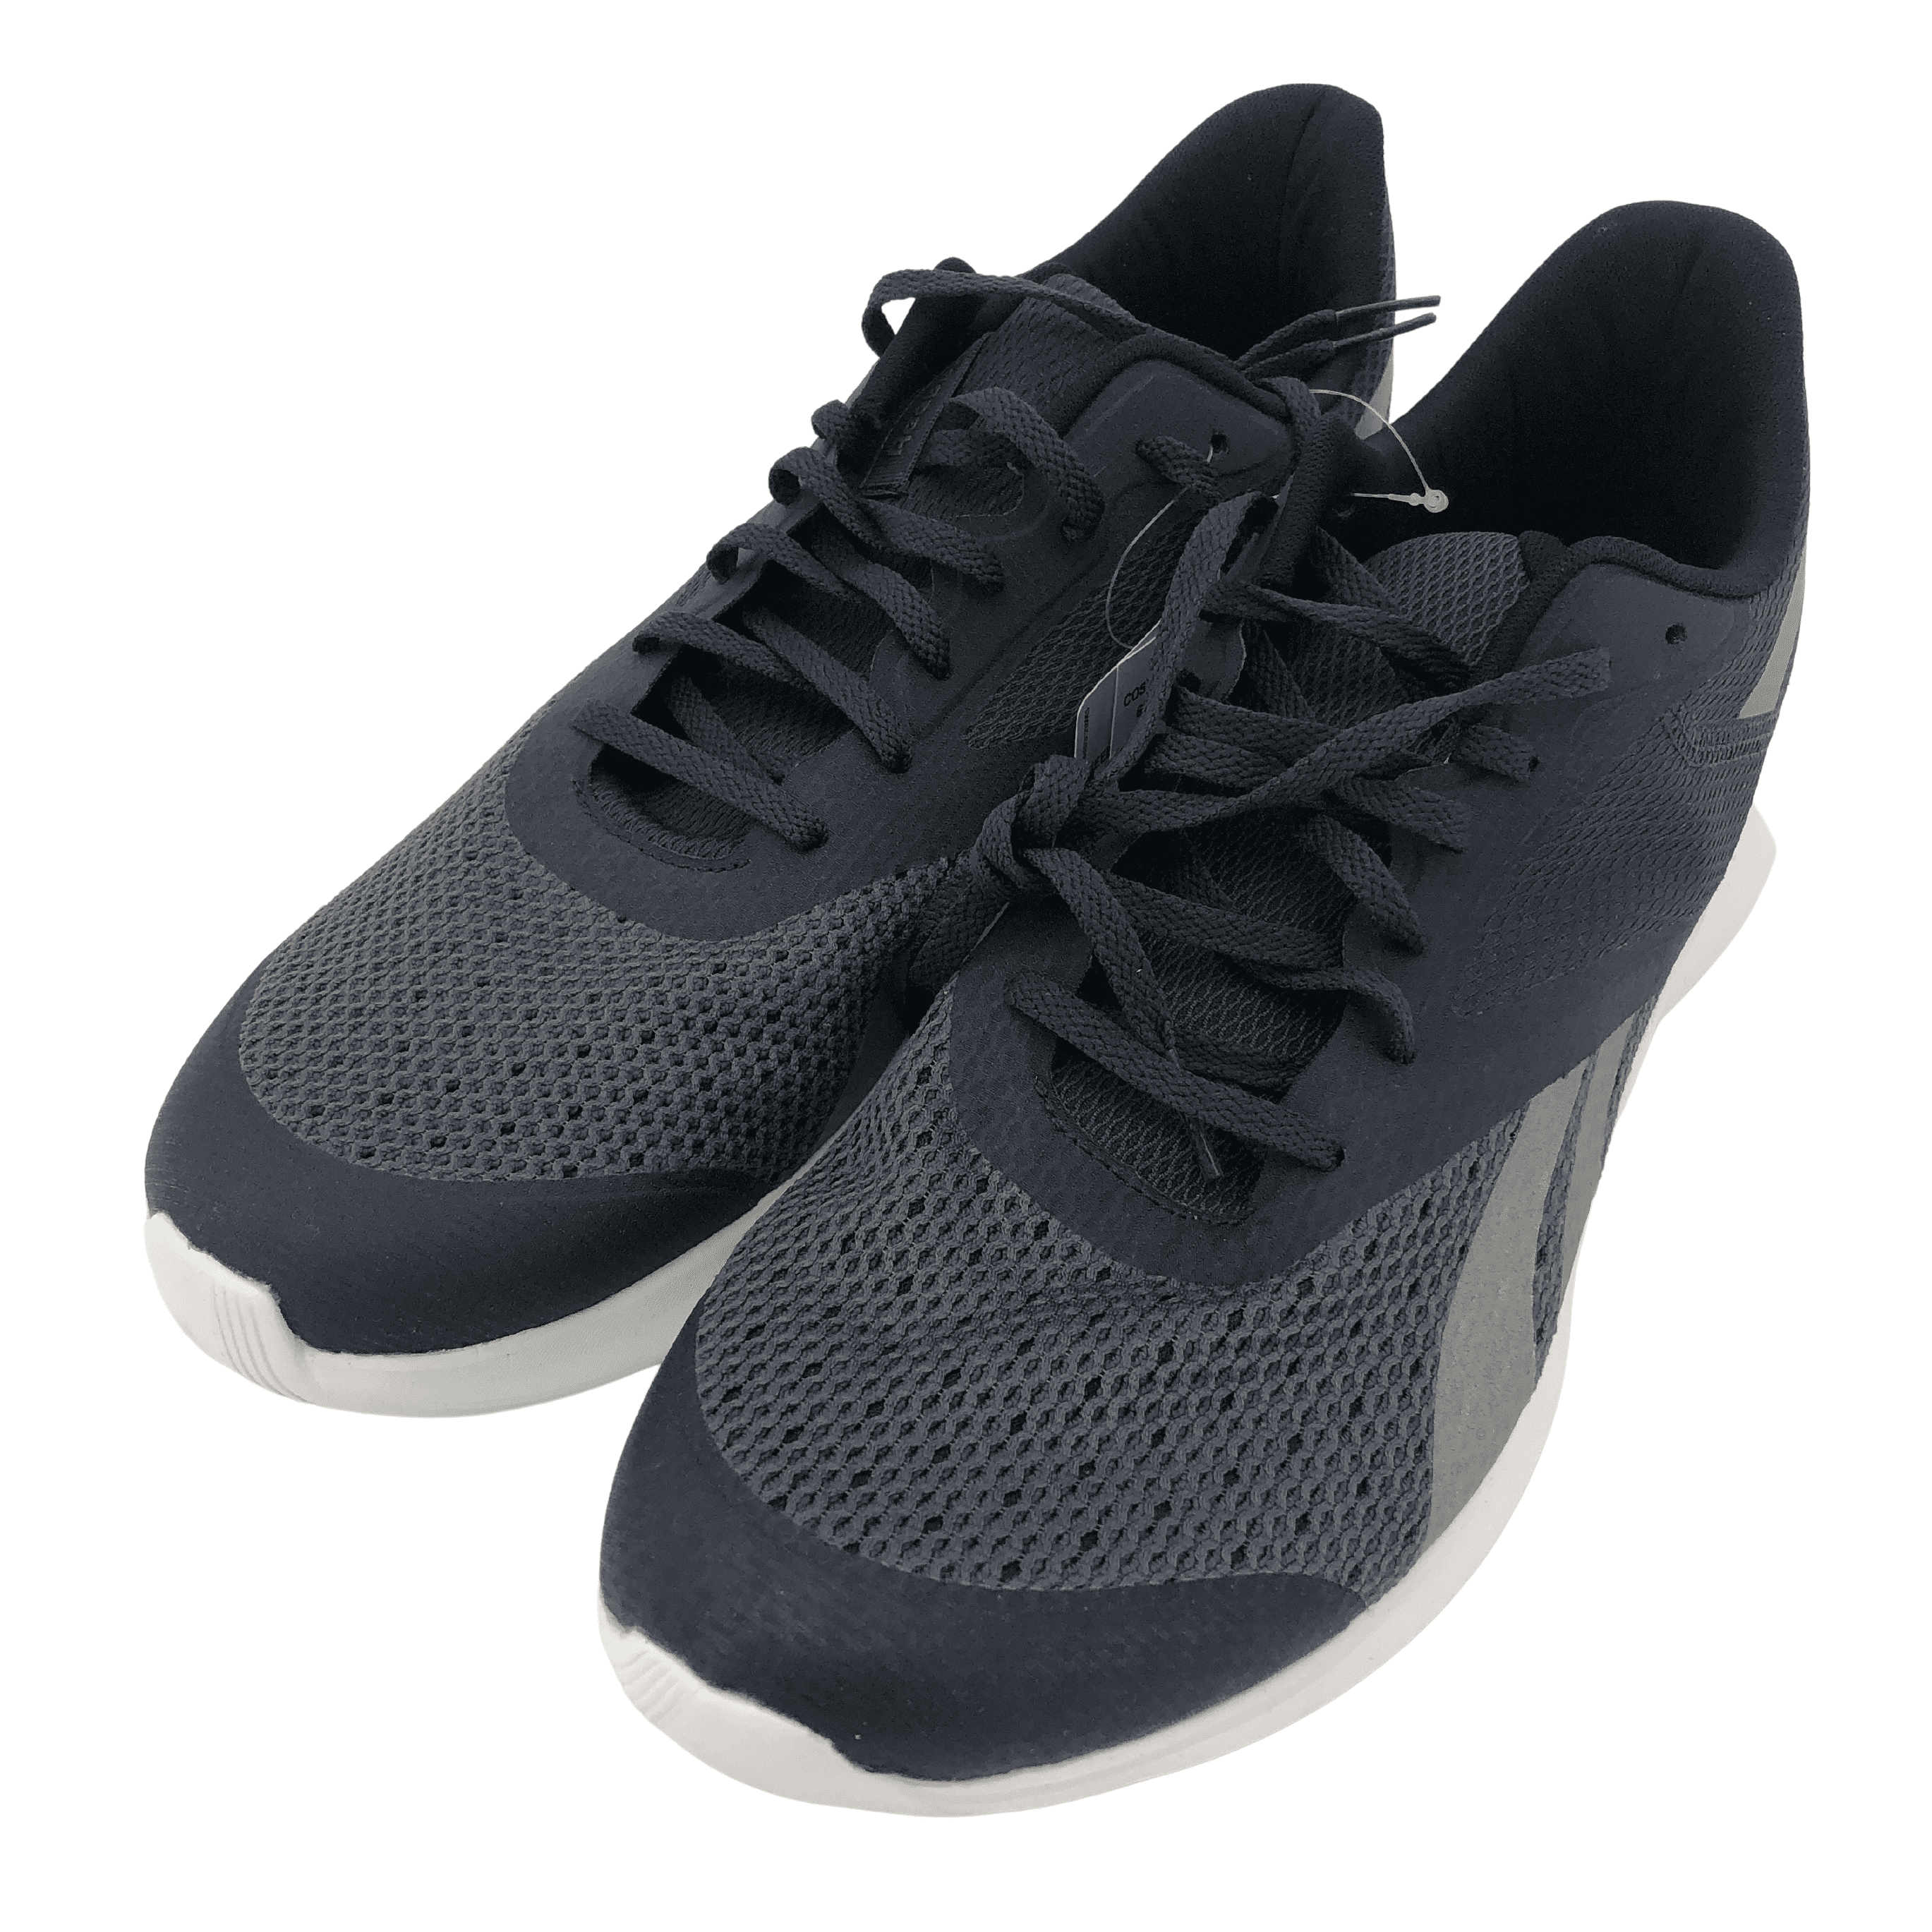 Reebok Men's Running Shoes / Speed Breeze 2.0 / Navy Blue / Various Sizes